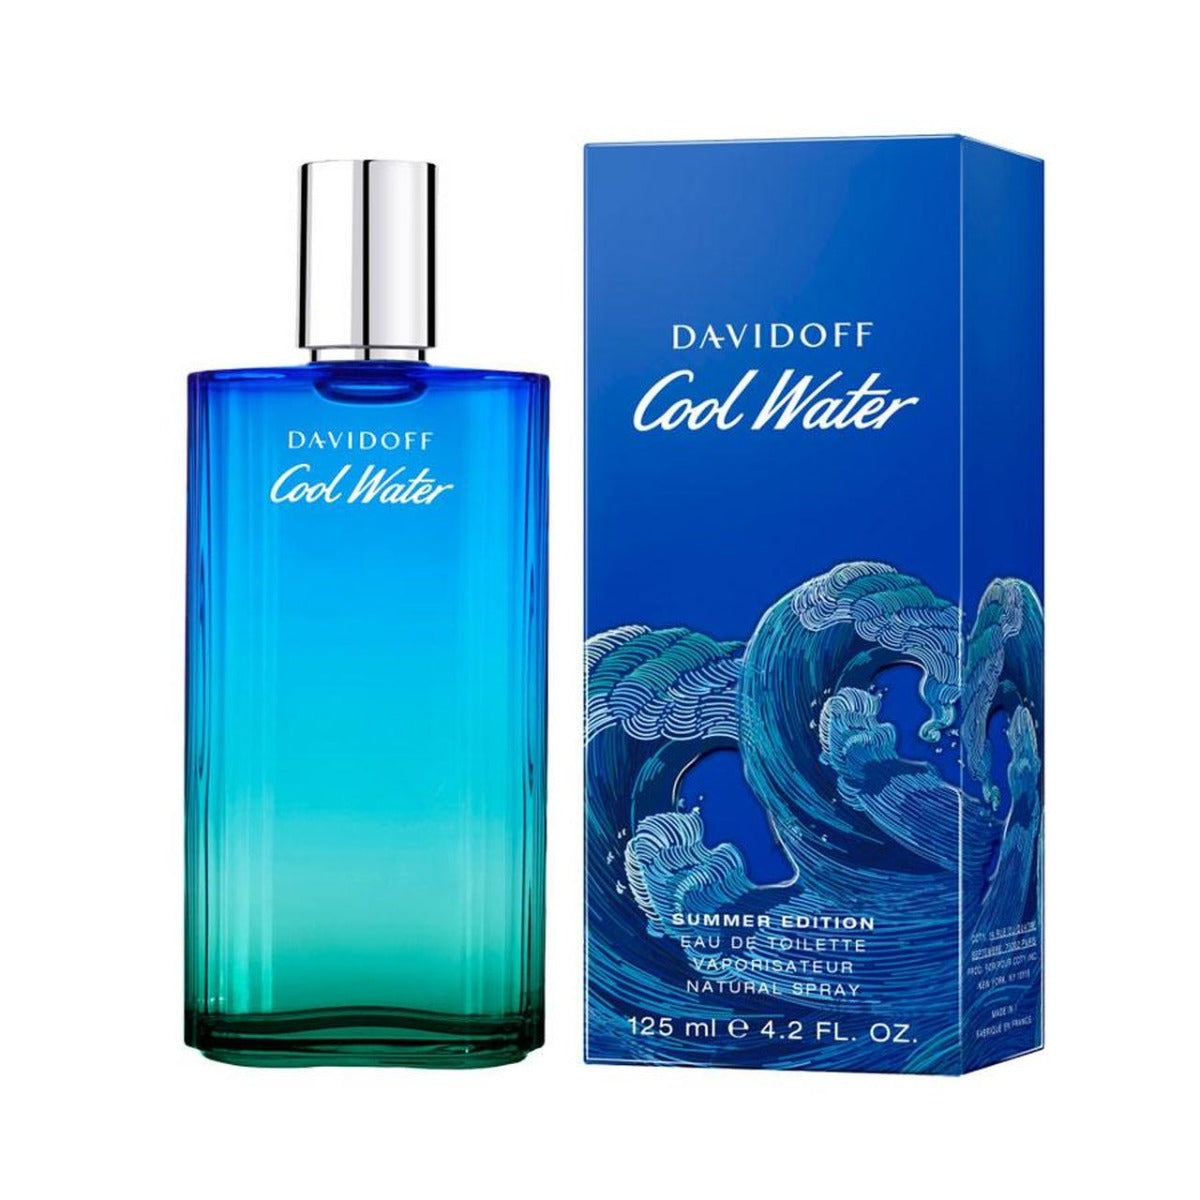 Davidoff Cool Water Summer Edition 2019 EDT For Men, 125 ml - samawa perfumes 